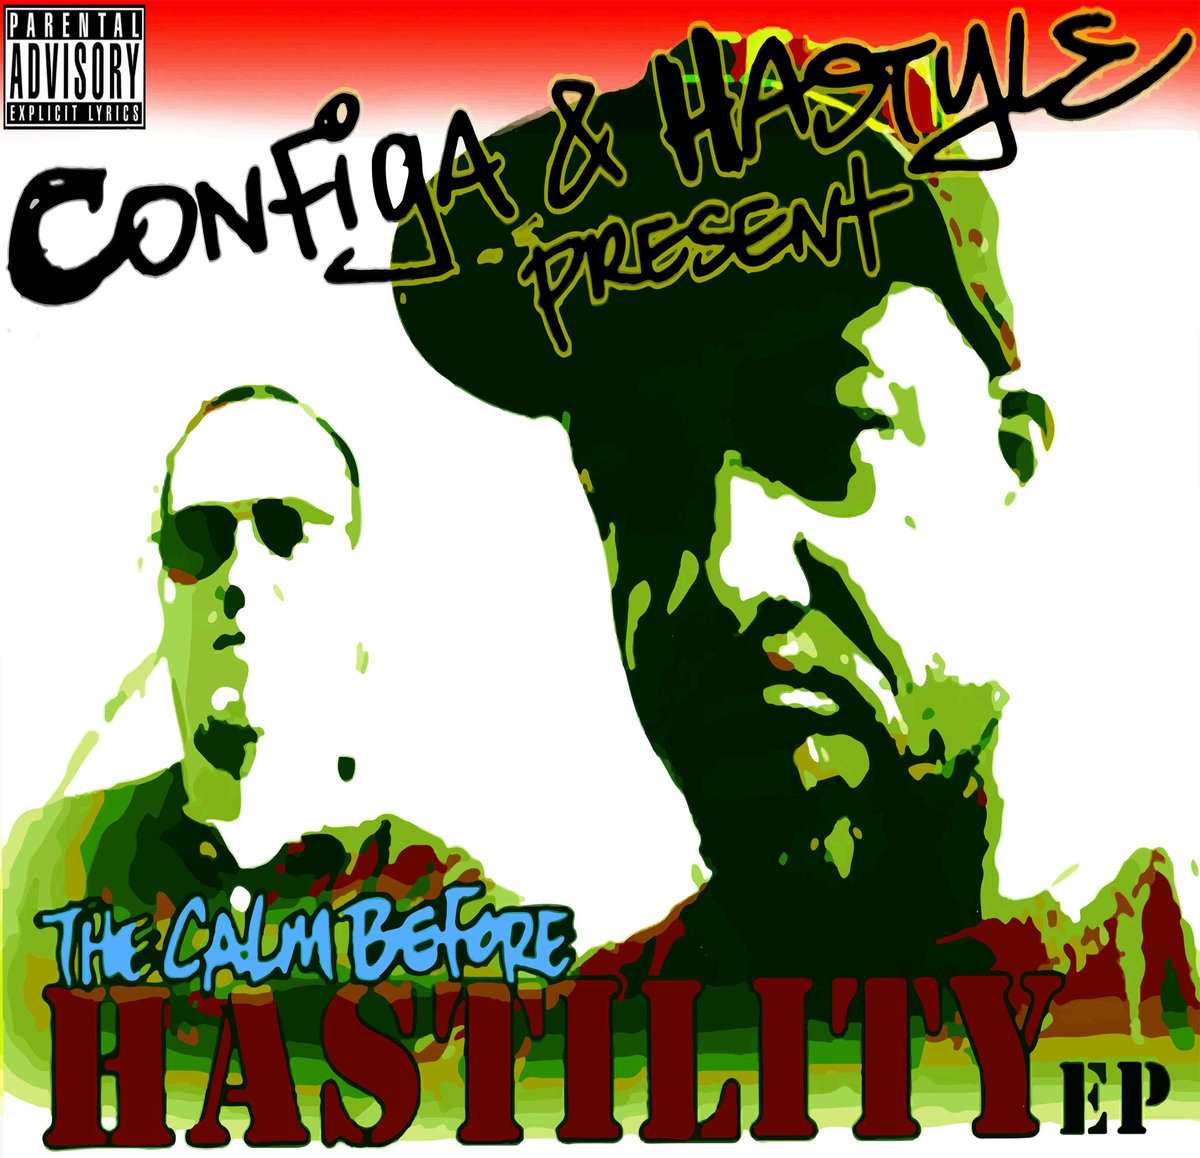 Configa and Hastyle - "Asylum" (Insane Remix)